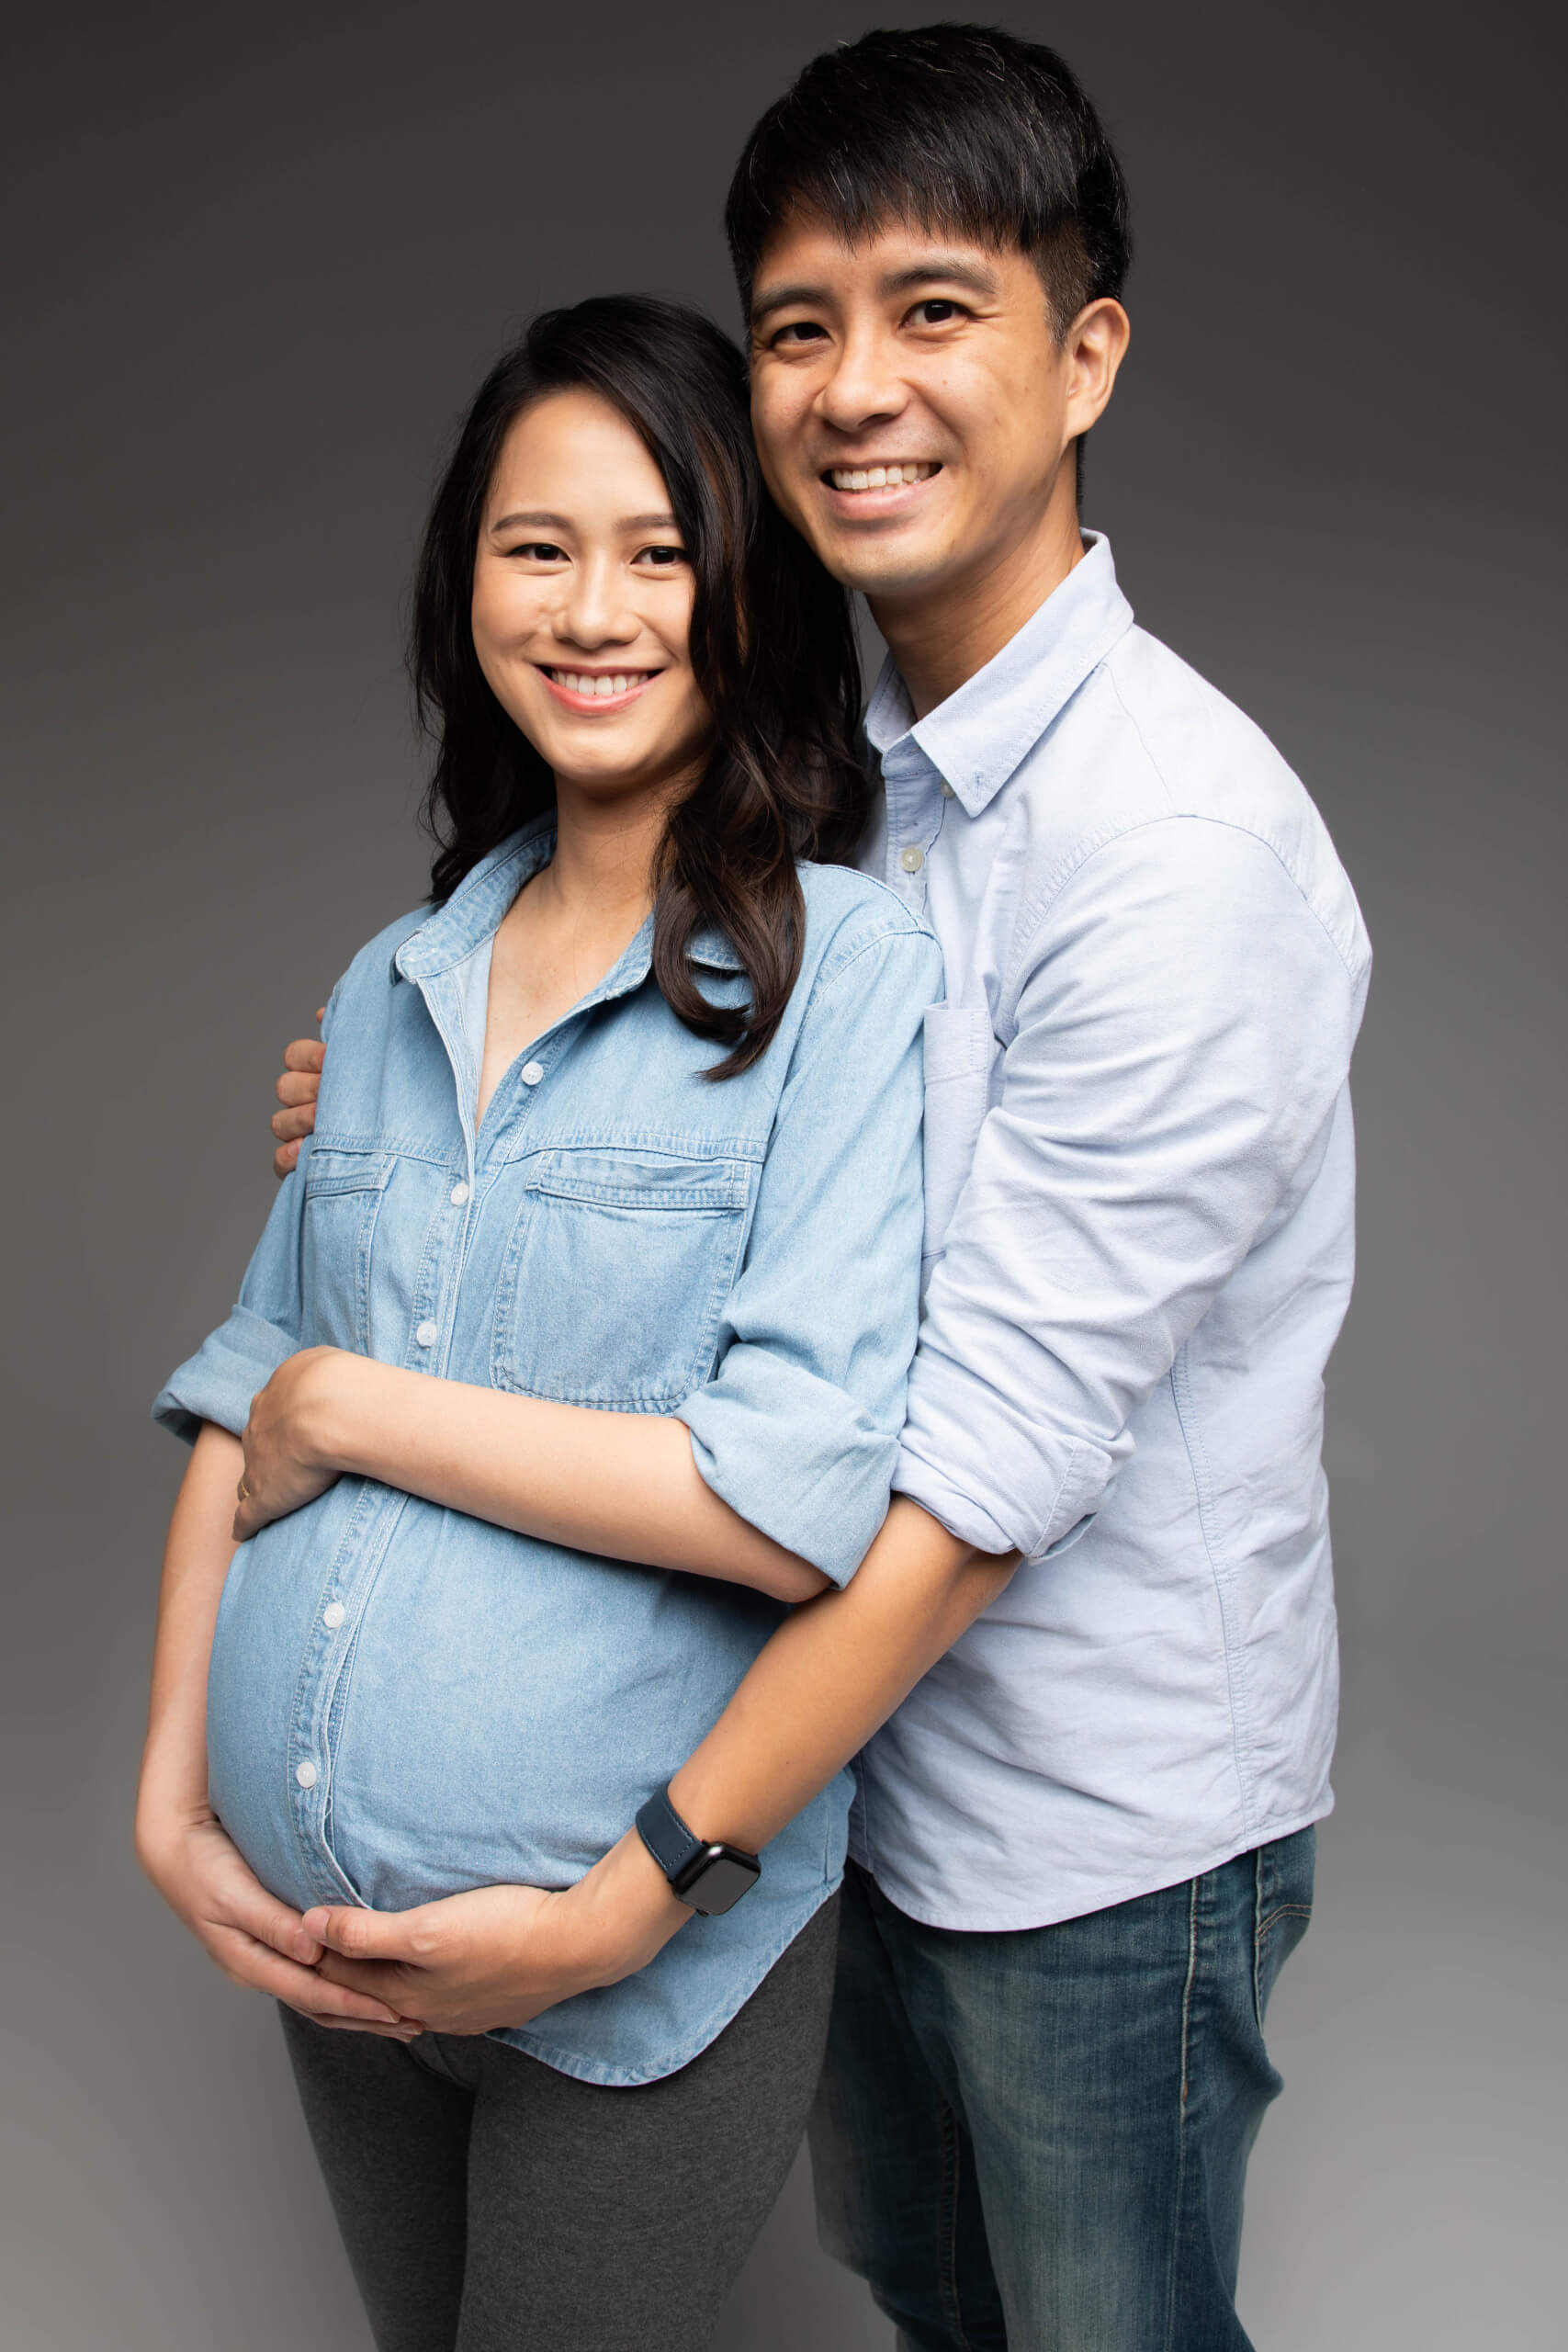 Pregnancy Photo Studio Singapore